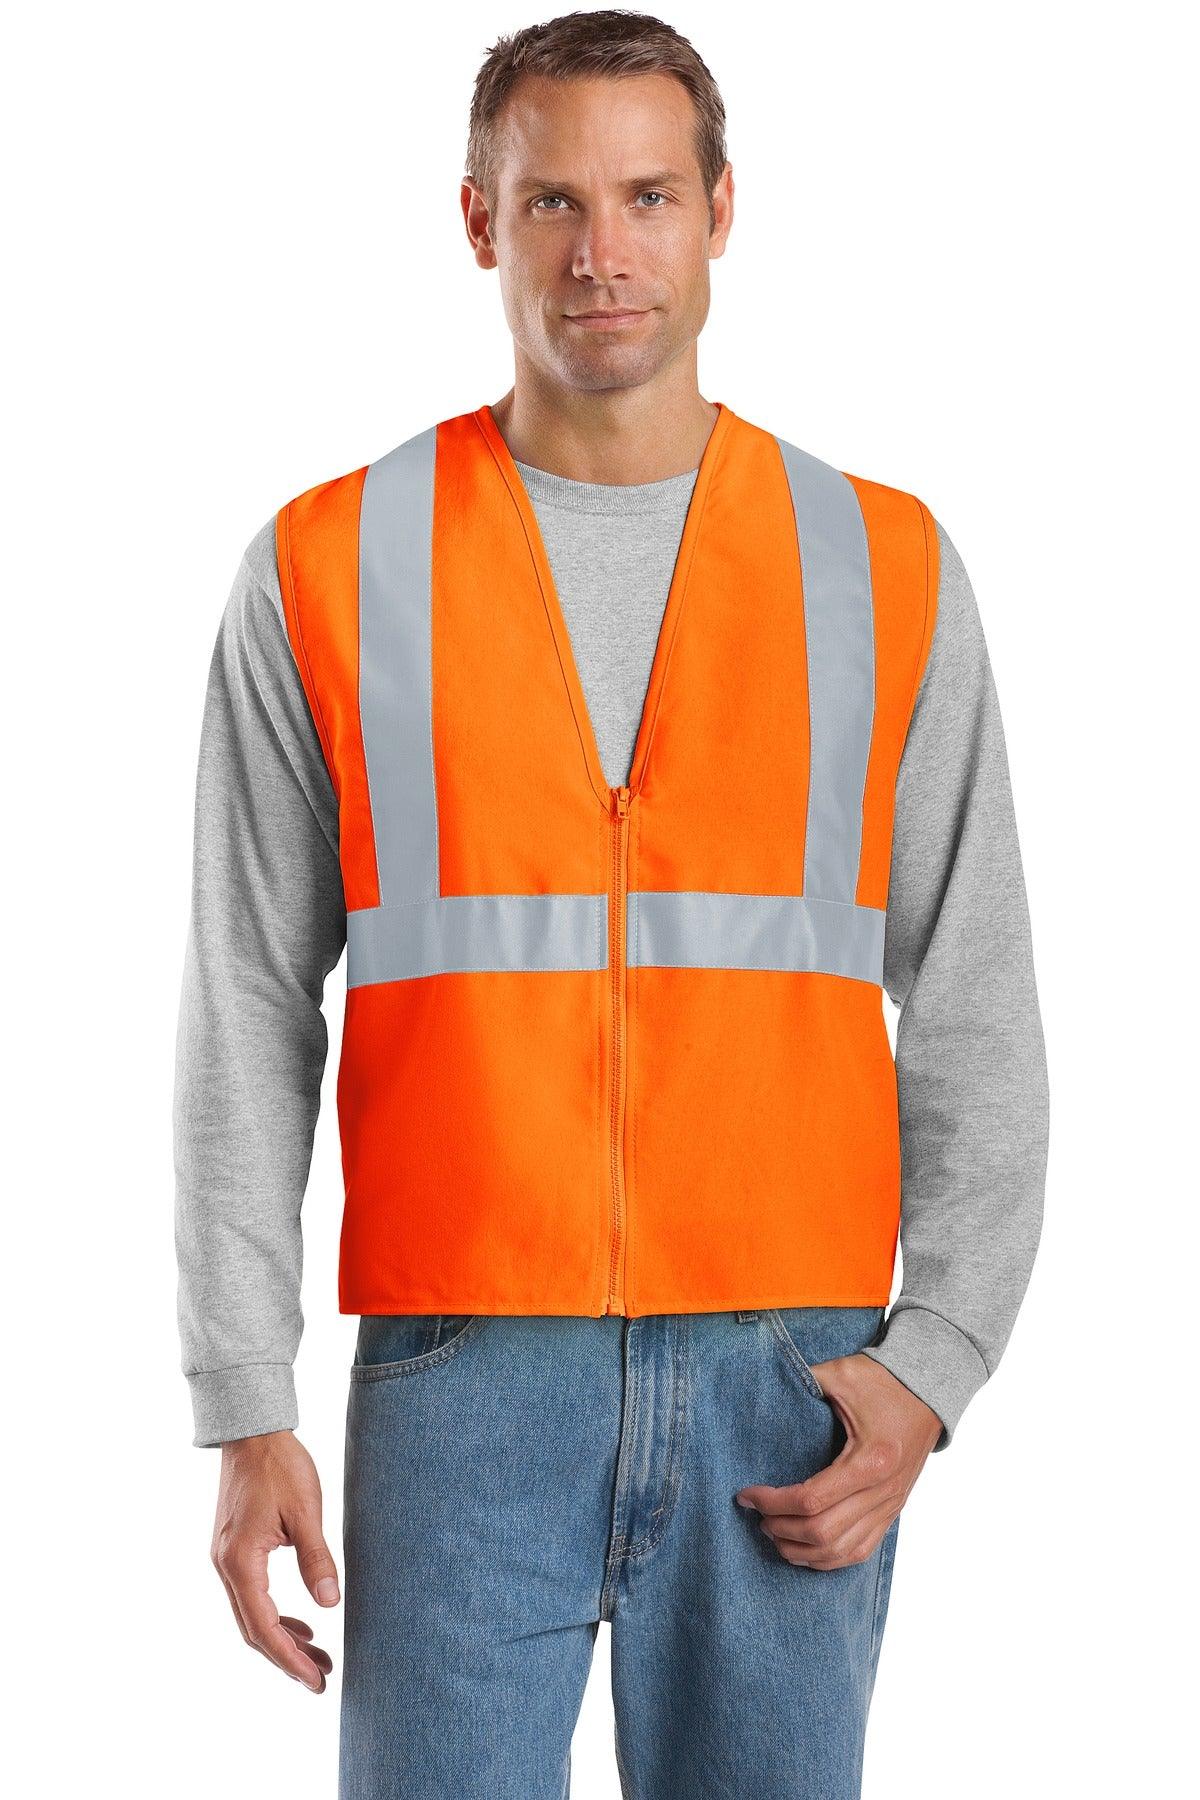 CornerStone - ANSI 107 Class 2 Safety Vest. CSV400 - Dresses Max